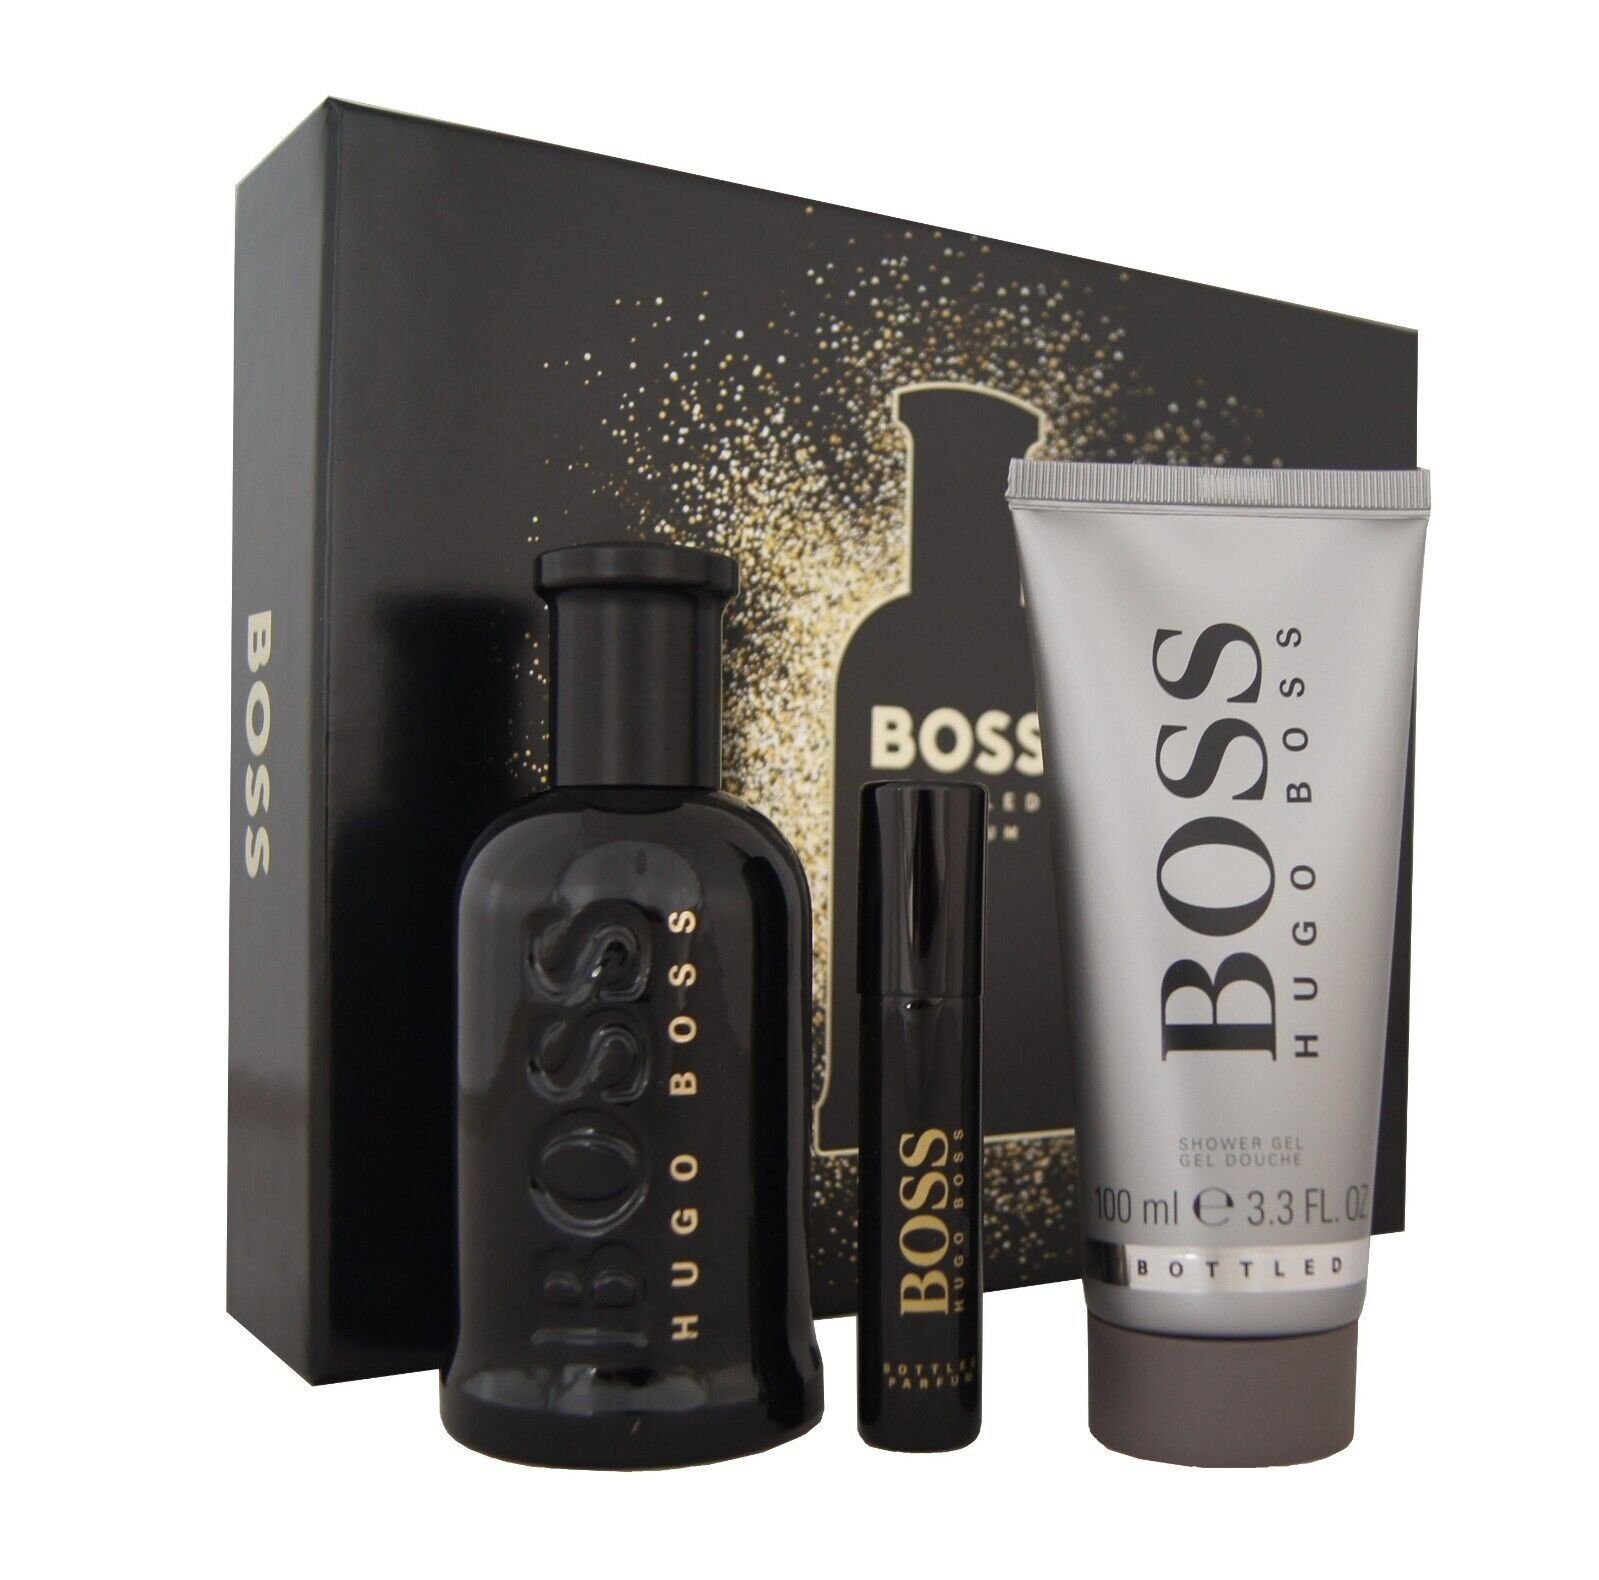 BOSS Parfum & 100ml Boss + 100ml, Gel Duft-Set Hugo 10ml Bottled Parfum Shower